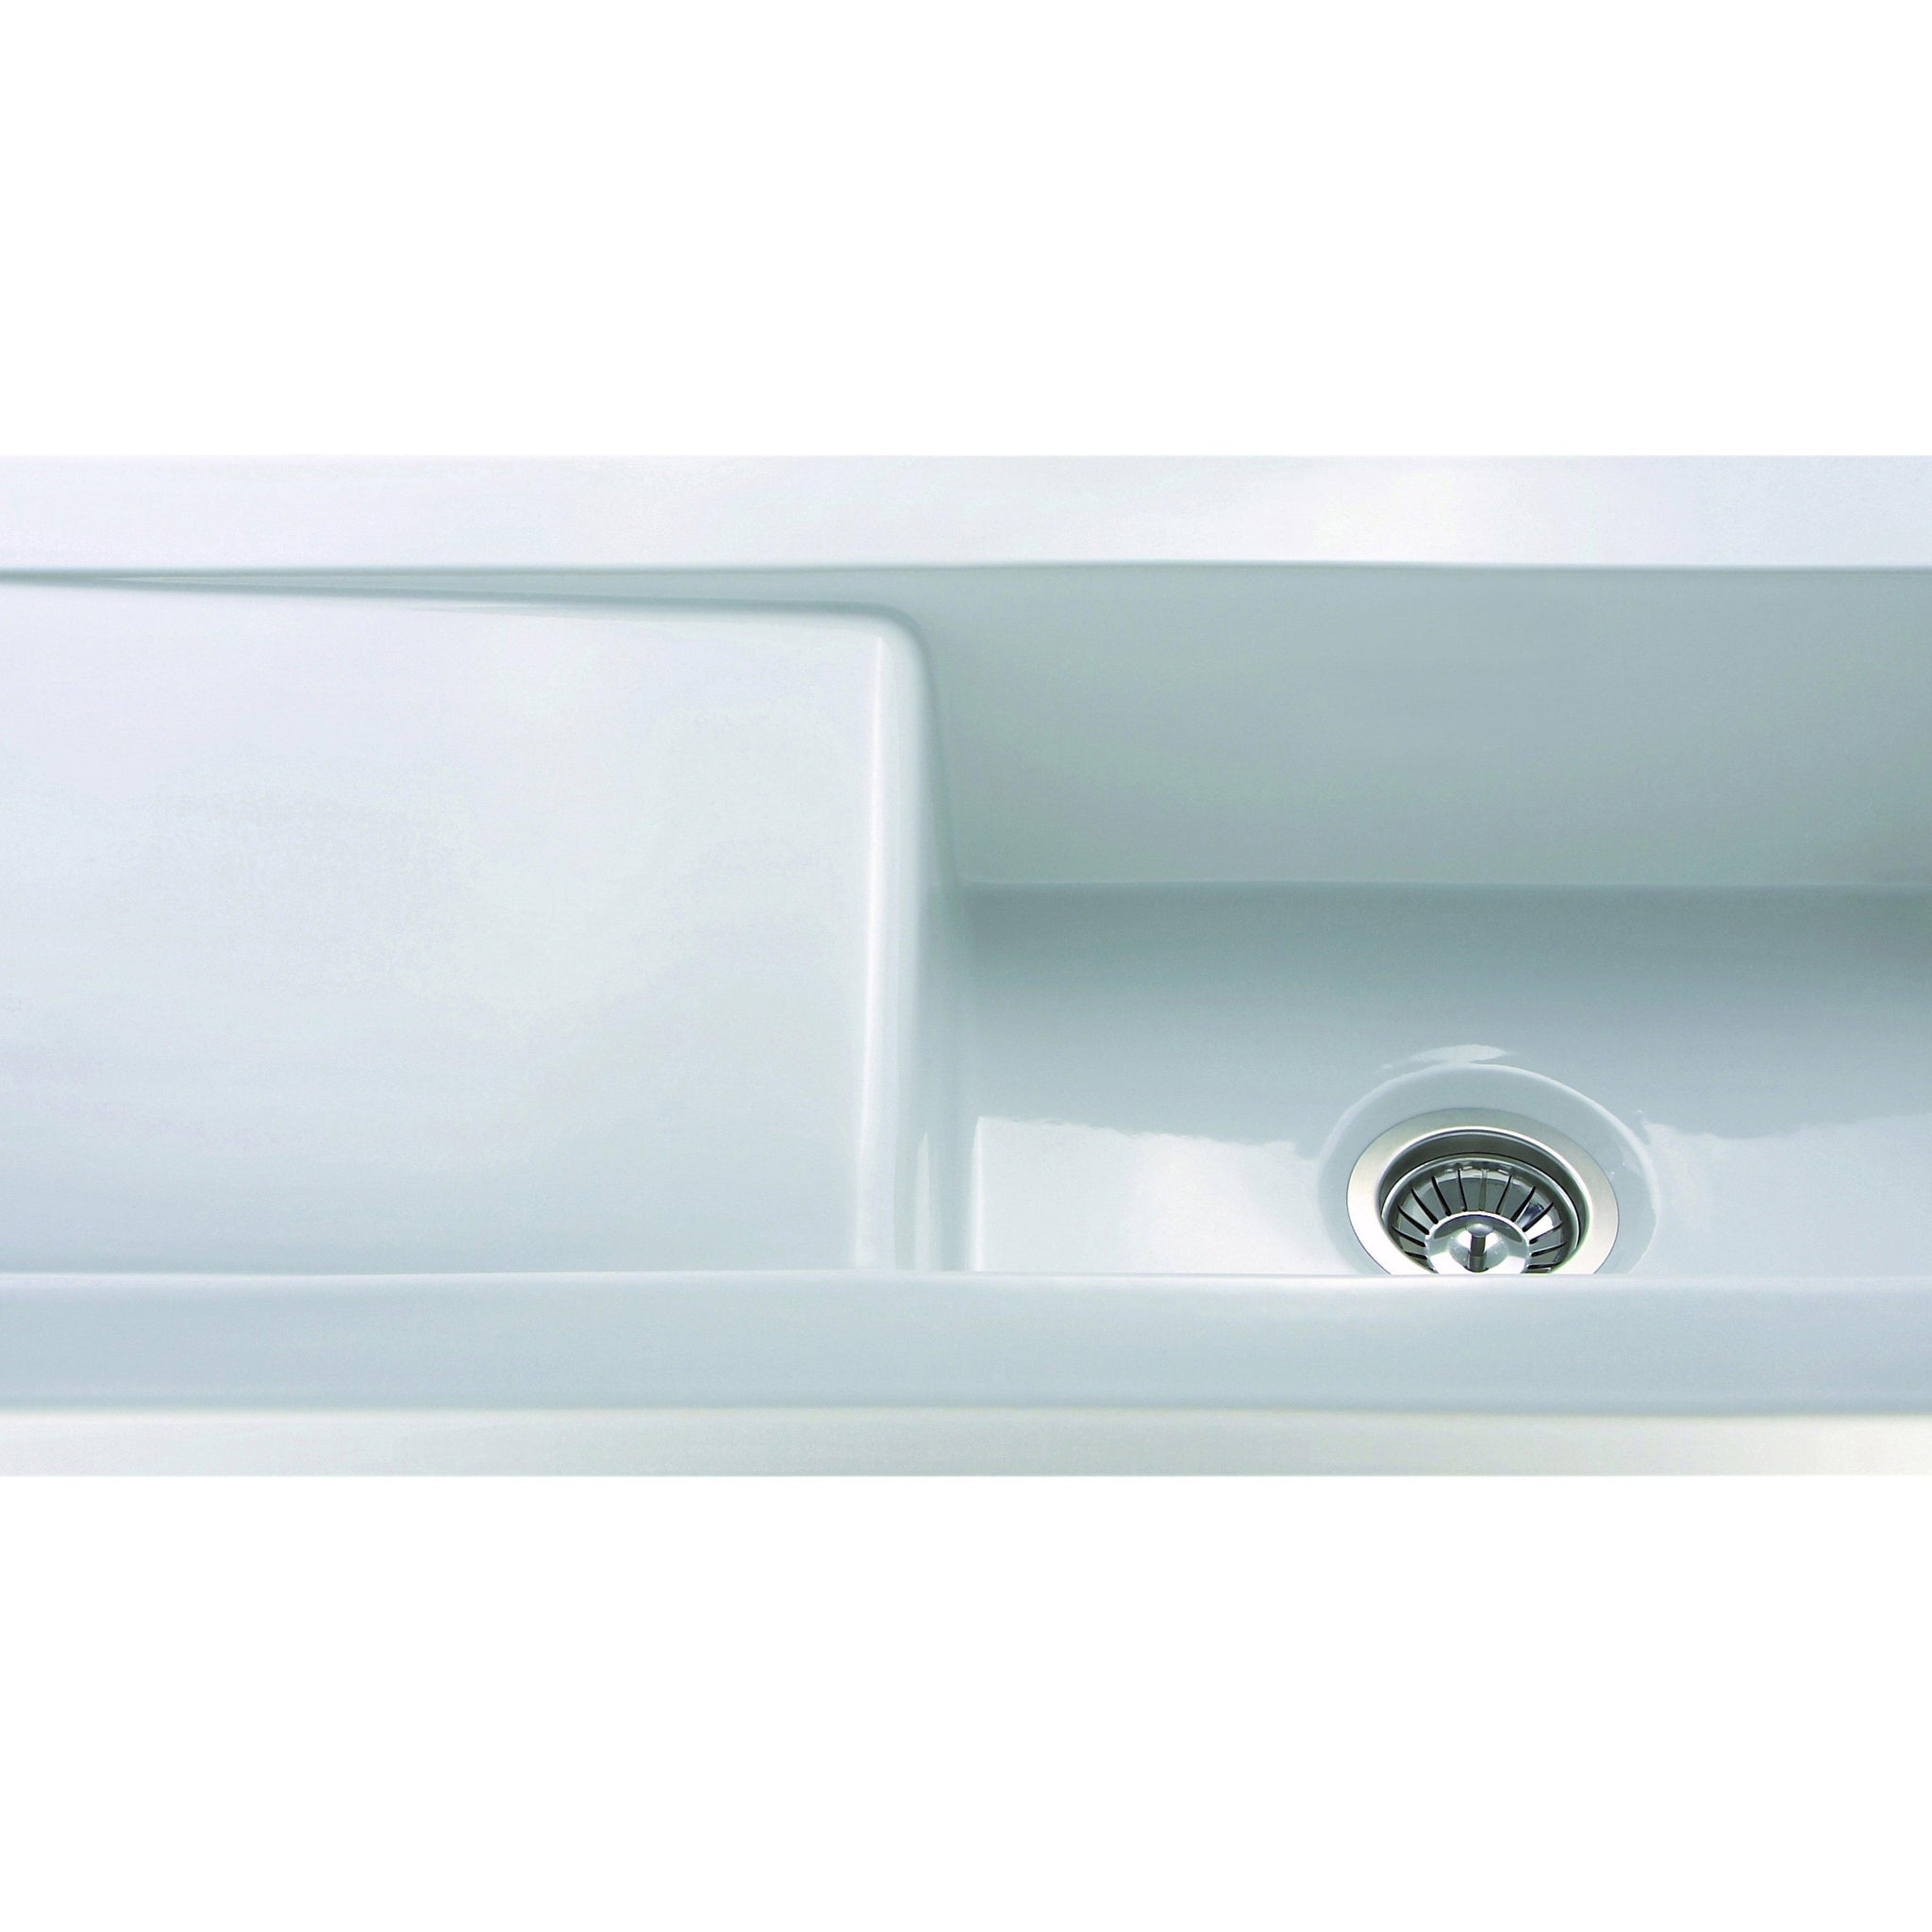 Cda Kc73wh Inset Ceramic Single Bowl Sink White